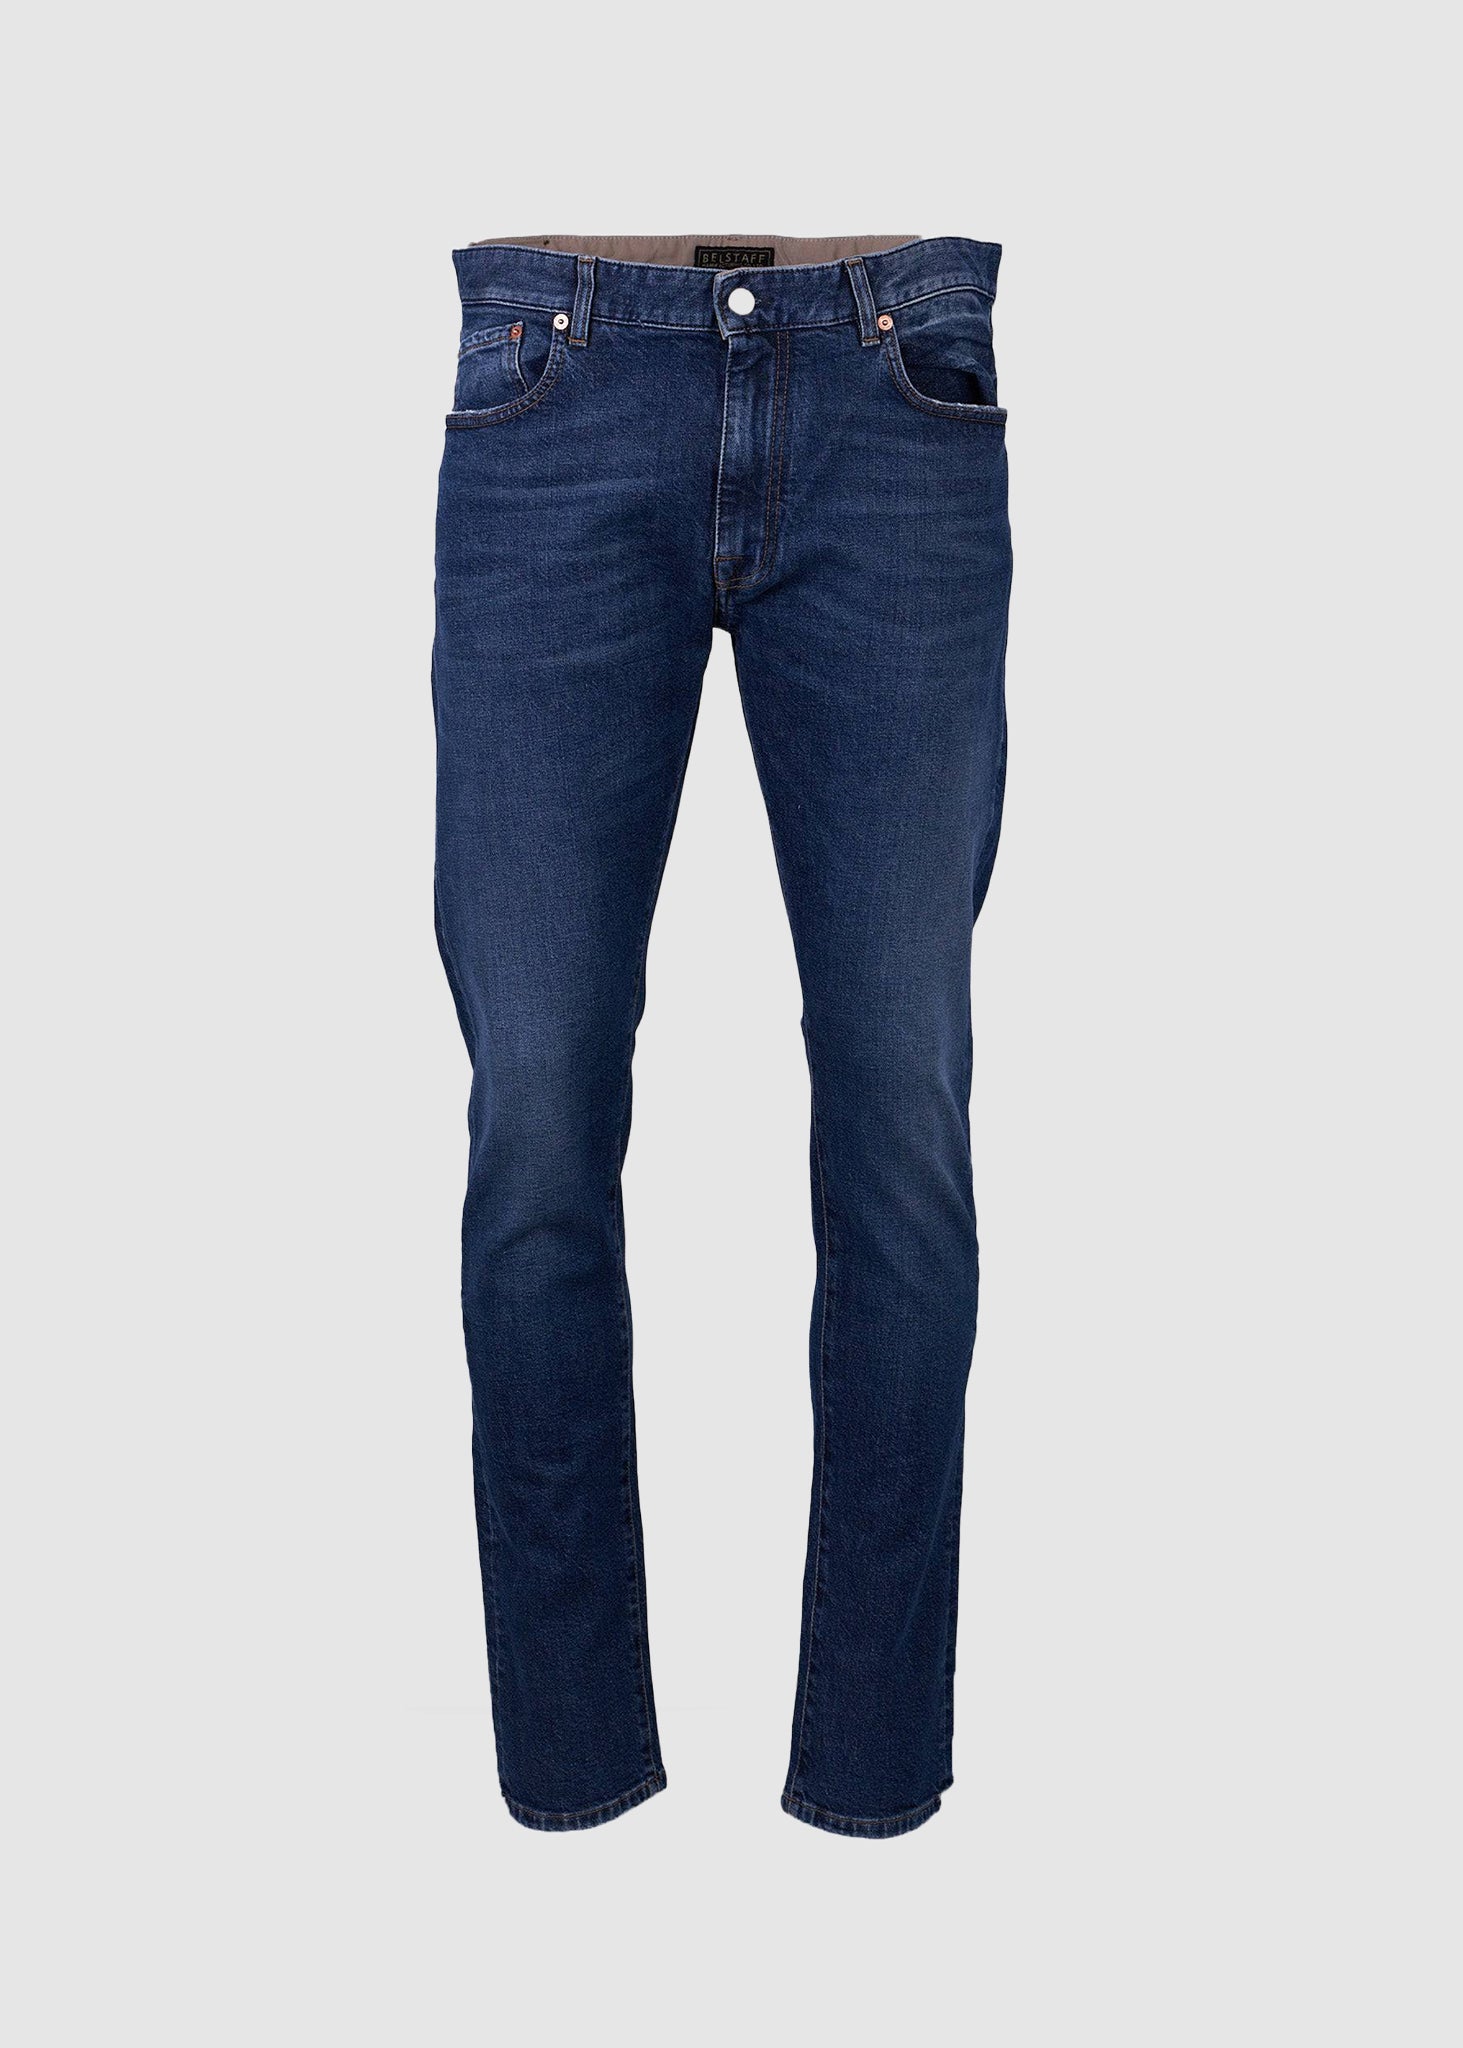 Image of Belstaff Mens Longton Slim Jeans In Dark Indigo